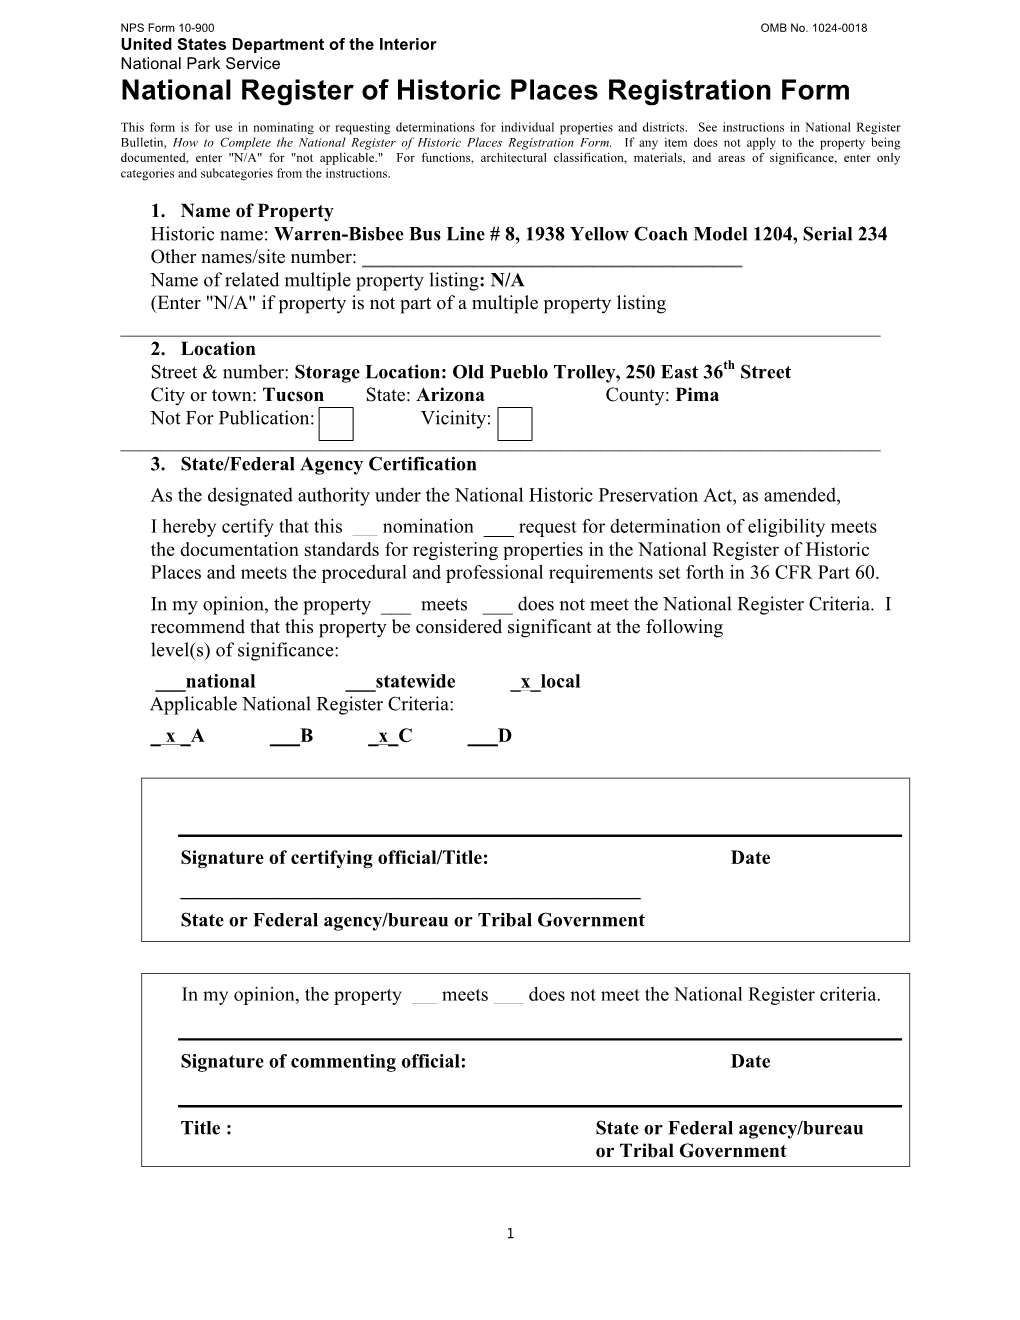 Warren-Bisbee Bus Line #8 DRAFT NRHP Nomination Form Download